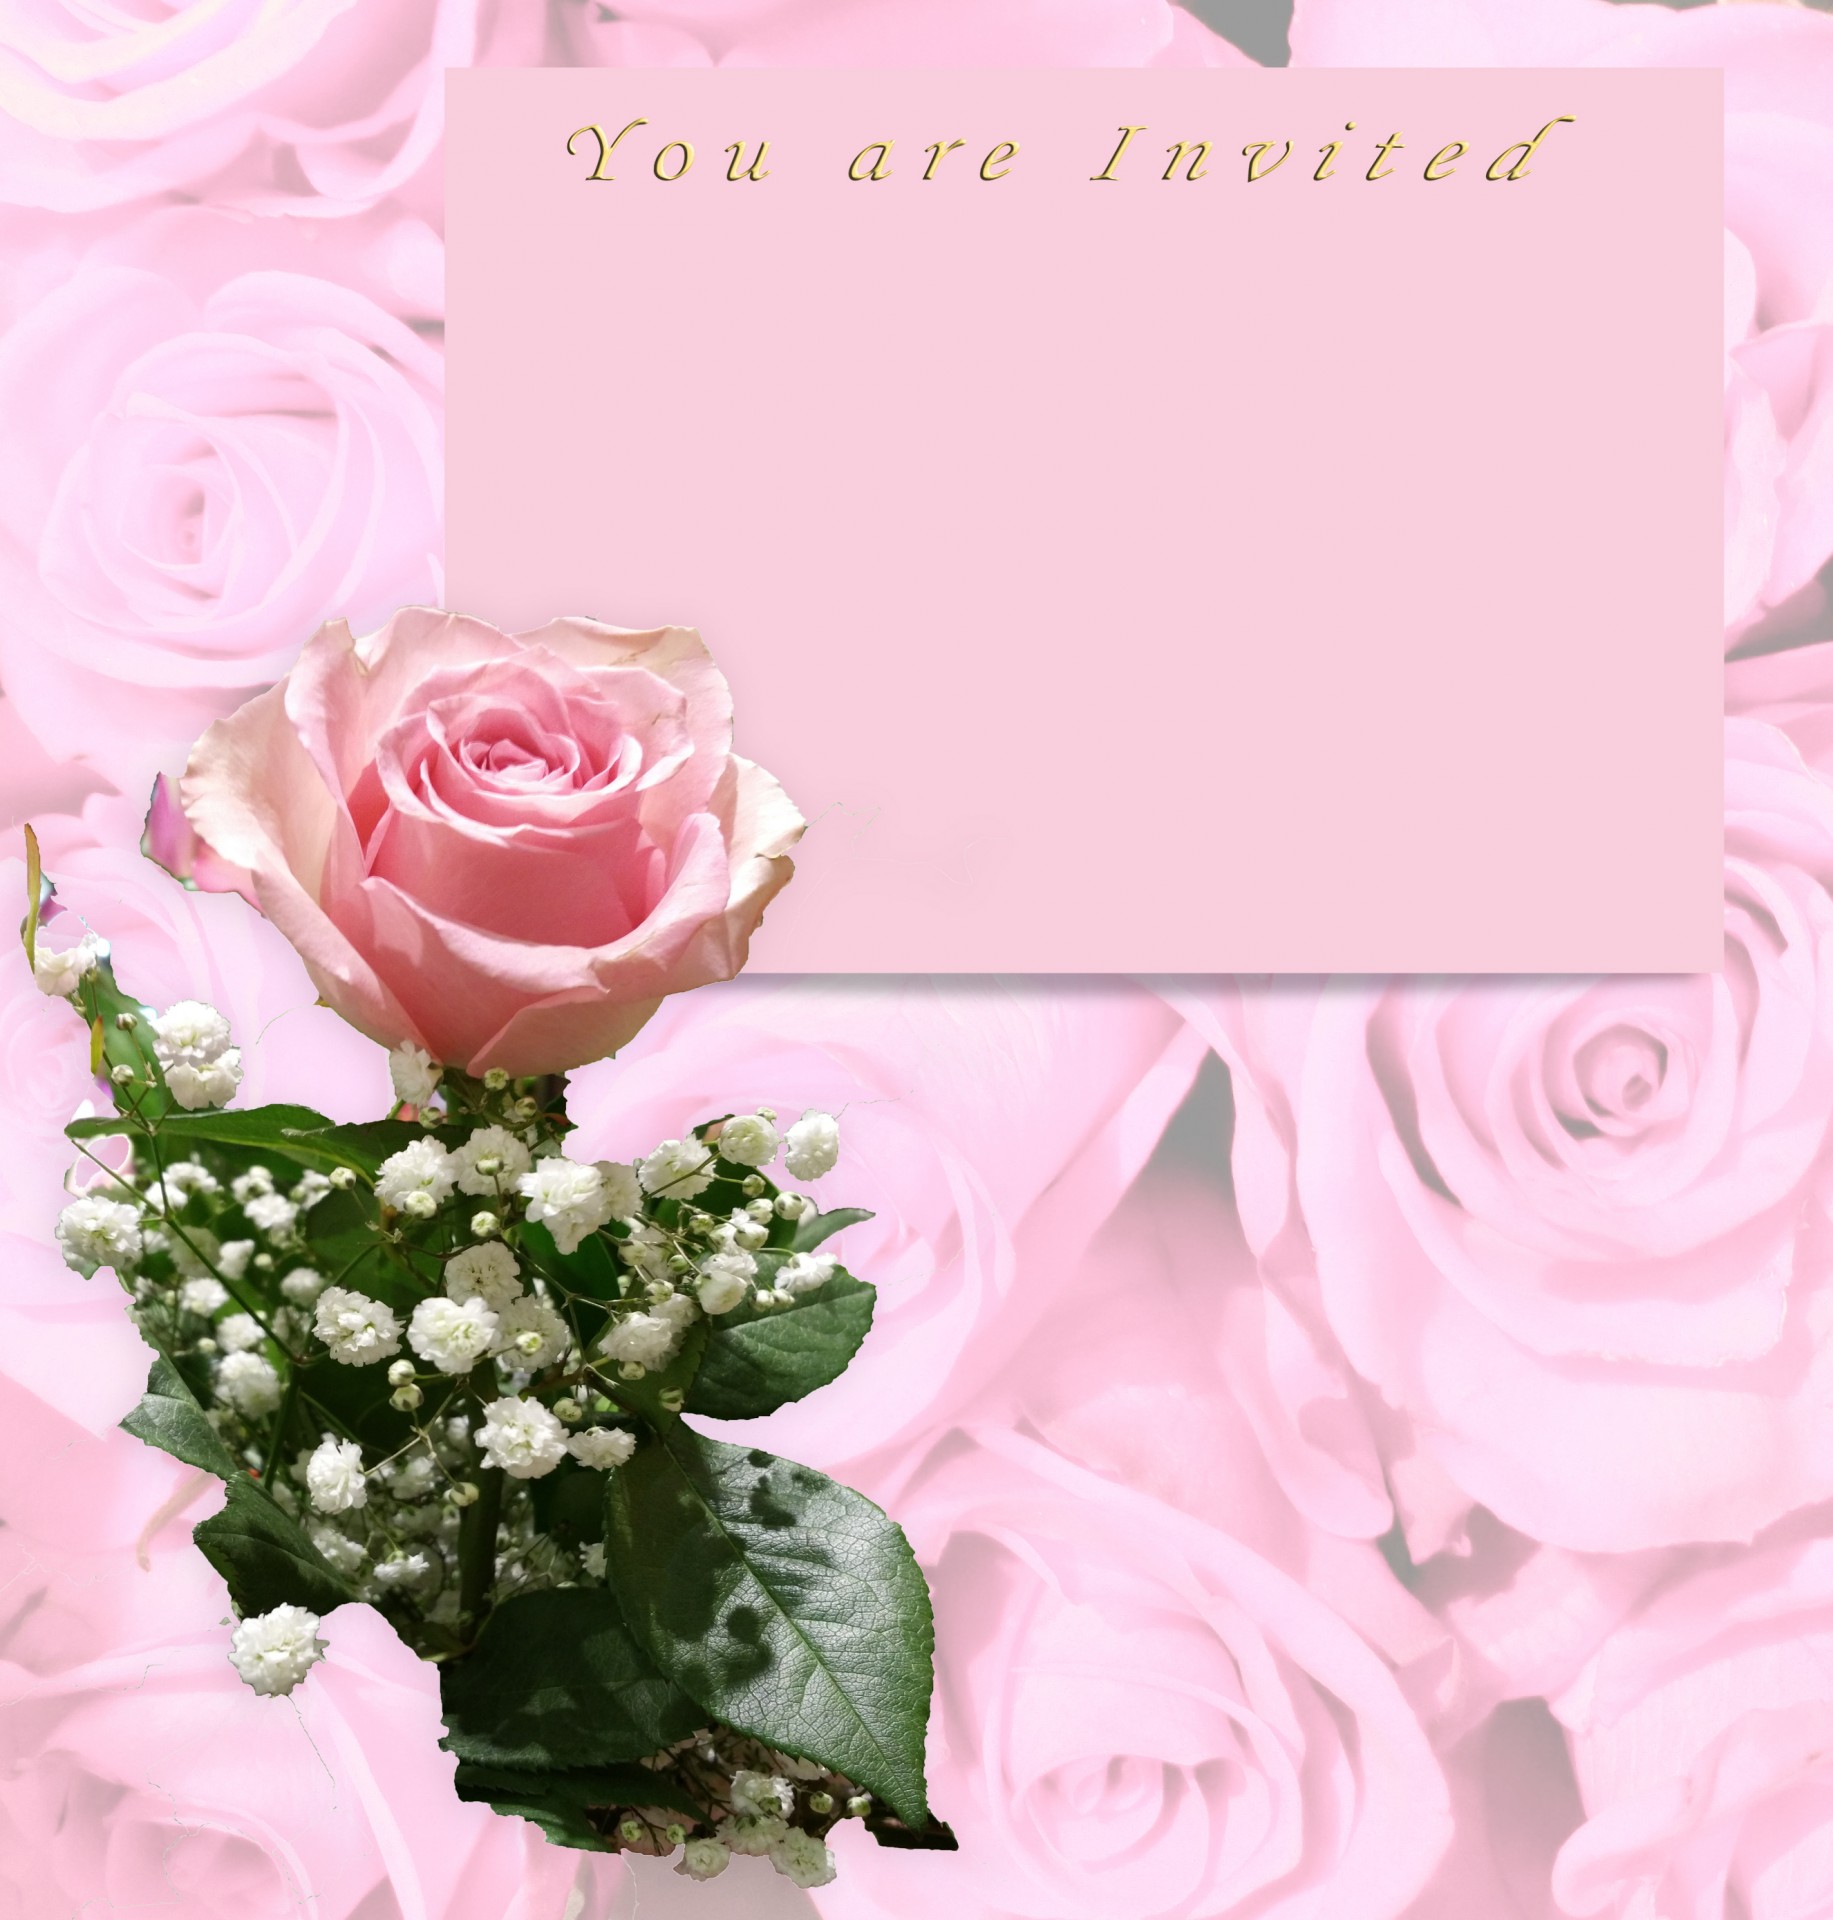 Pink Rose Invitation